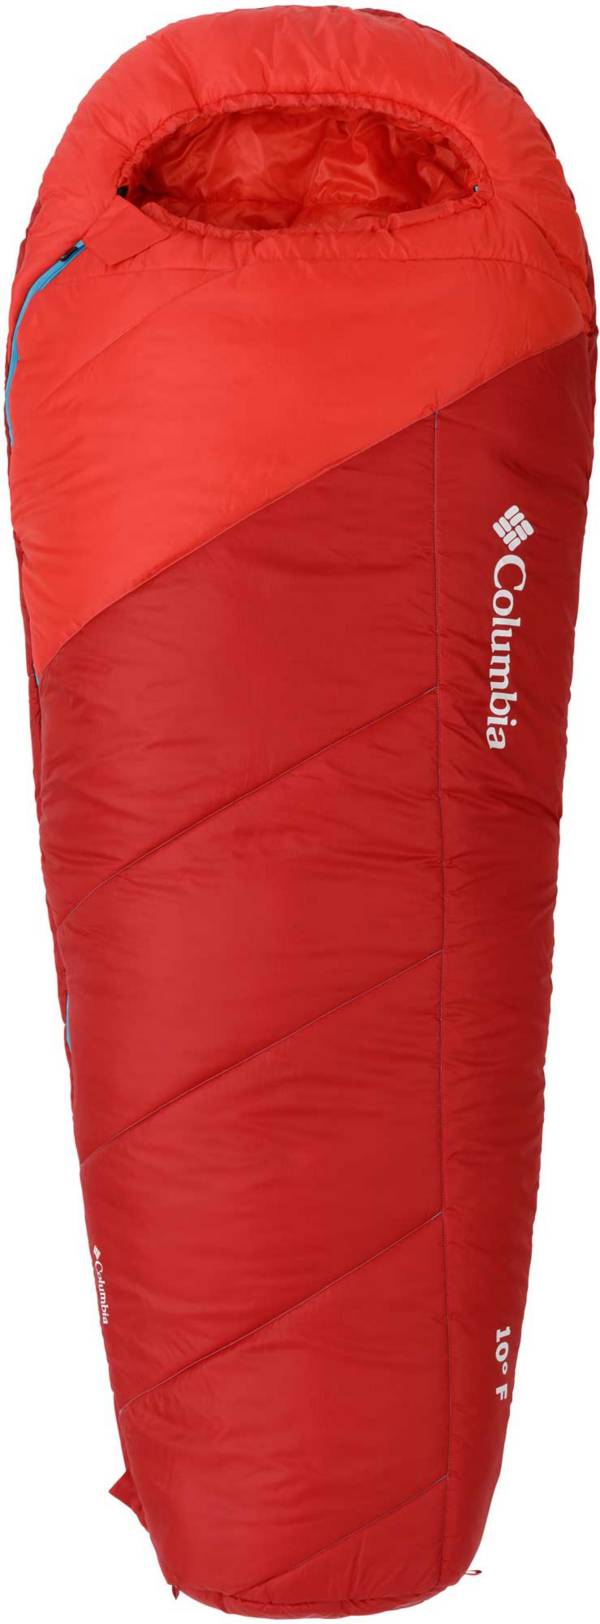 Columbia 10°F Sleeping Bag product image